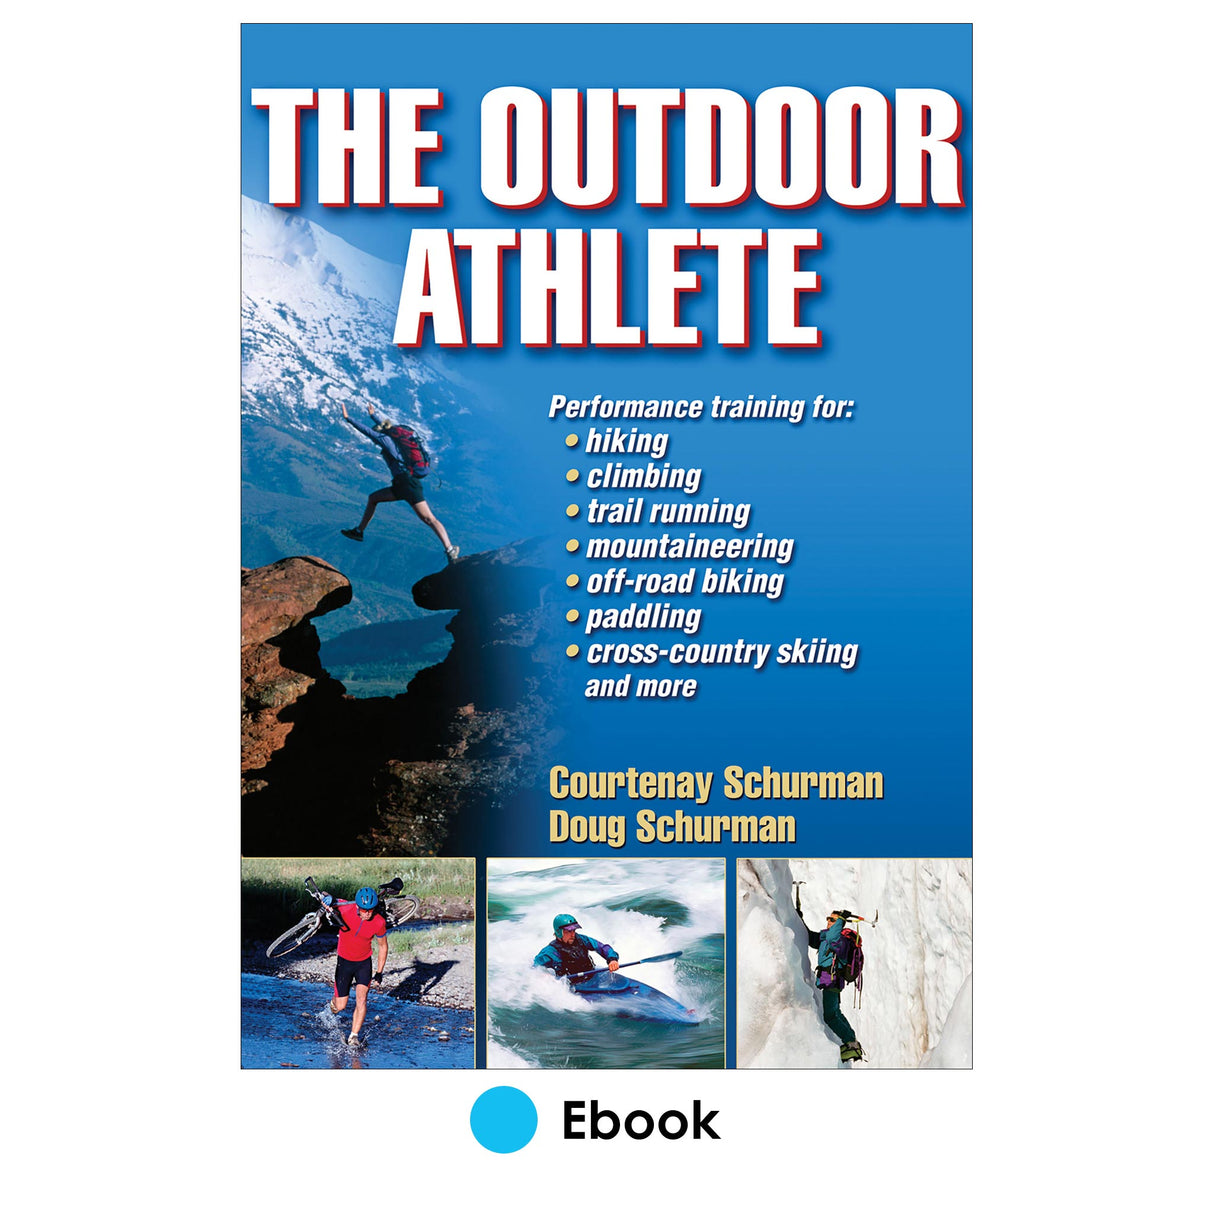 Outdoor Athlete PDF, The